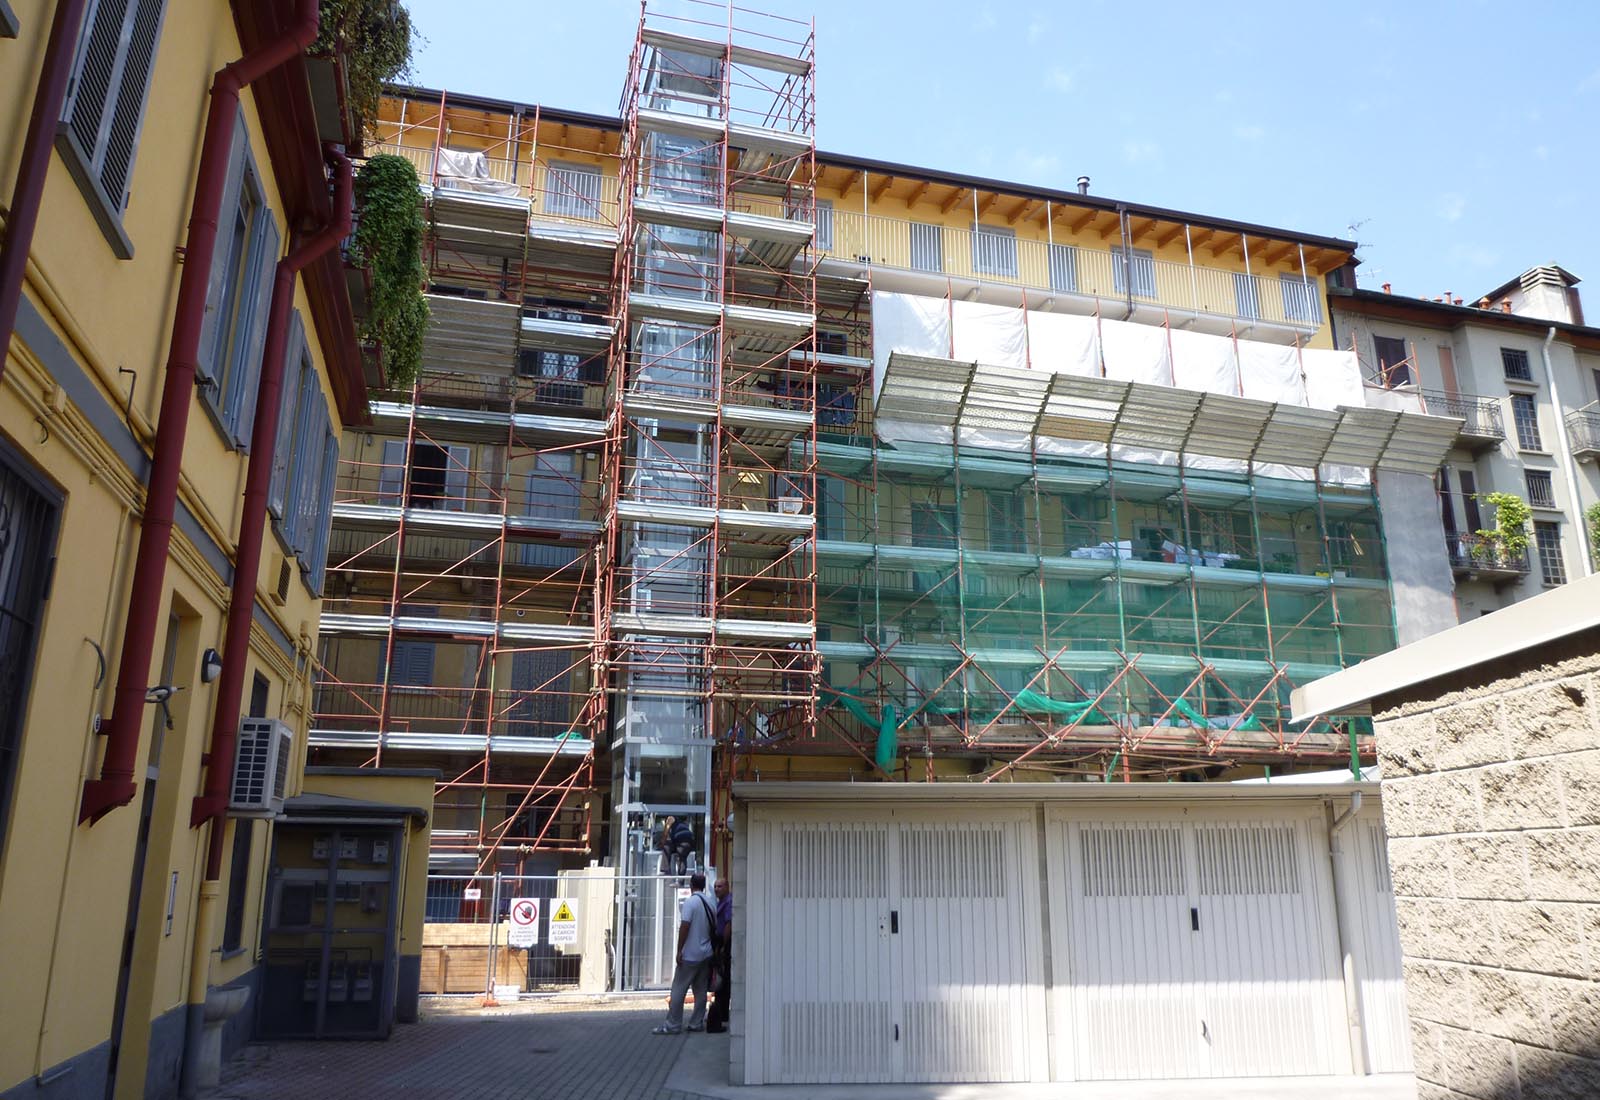 House extension in Imbonati street in Milan – View